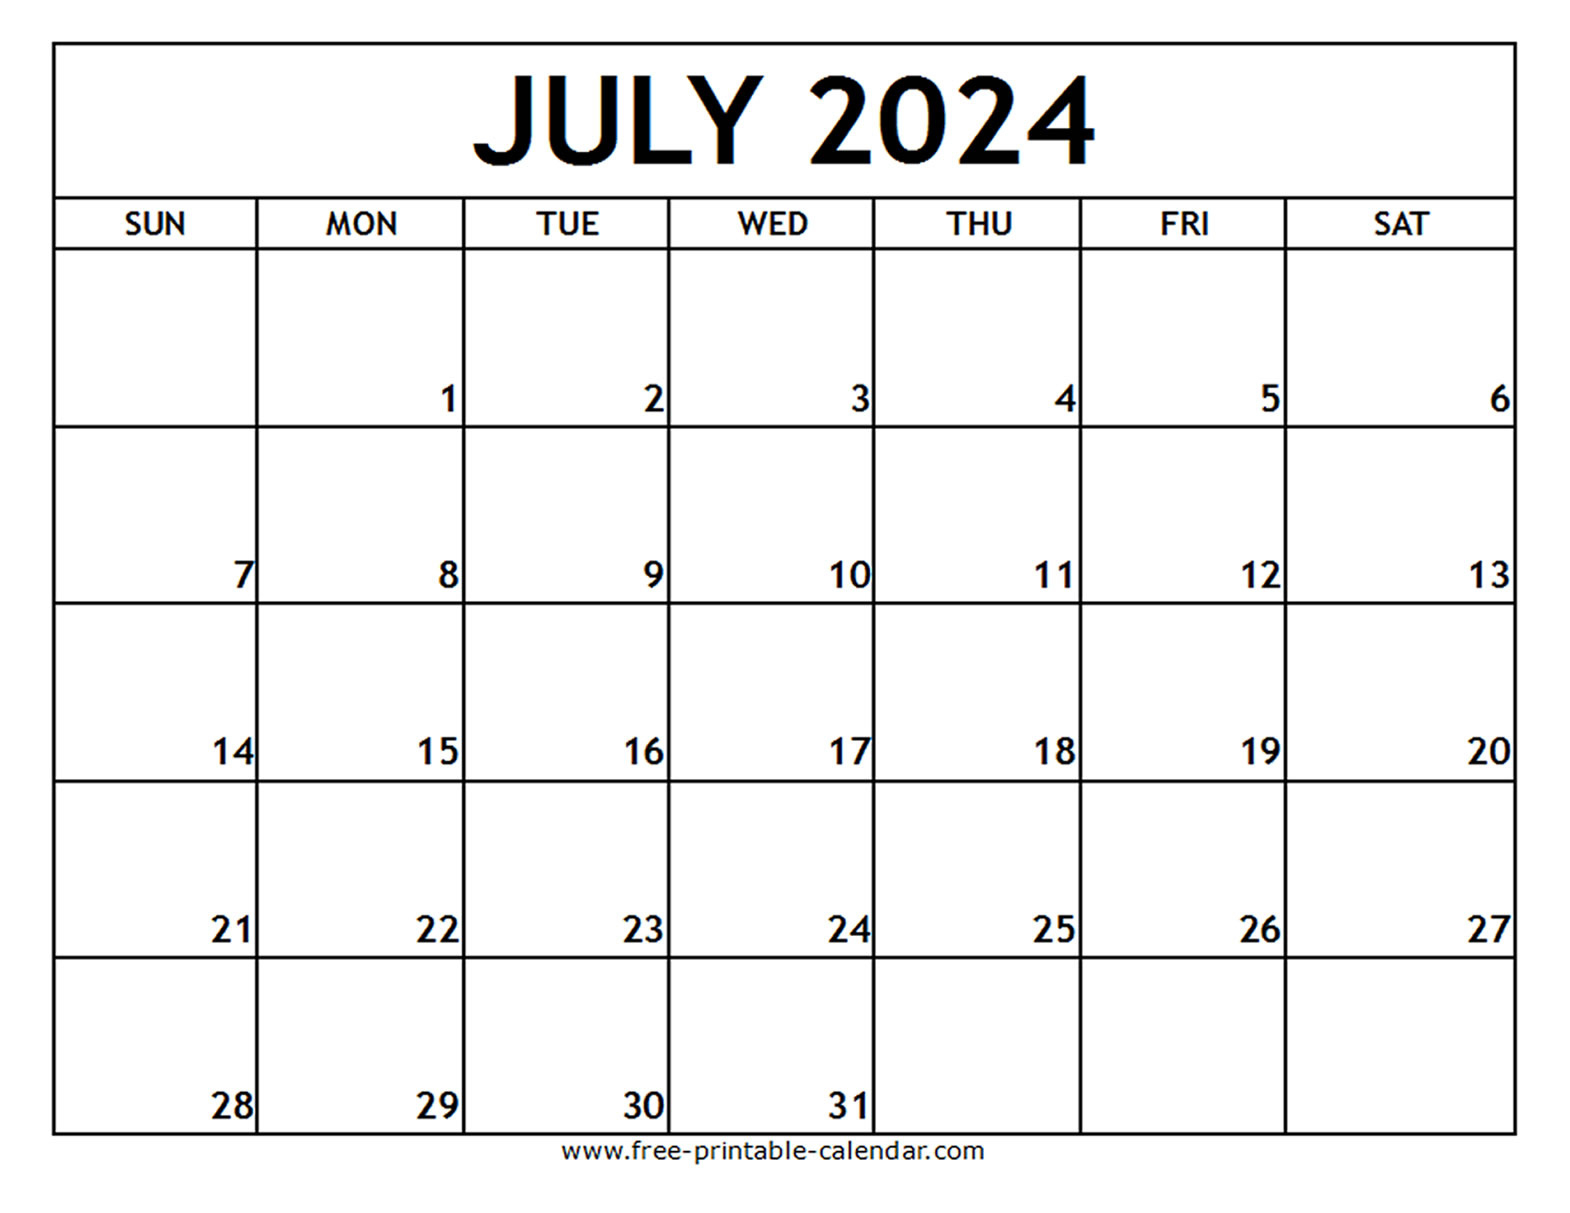 July 2024 Printable Calendar - Free-Printable-Calendar with regard to Free Editable July Calendar 2024